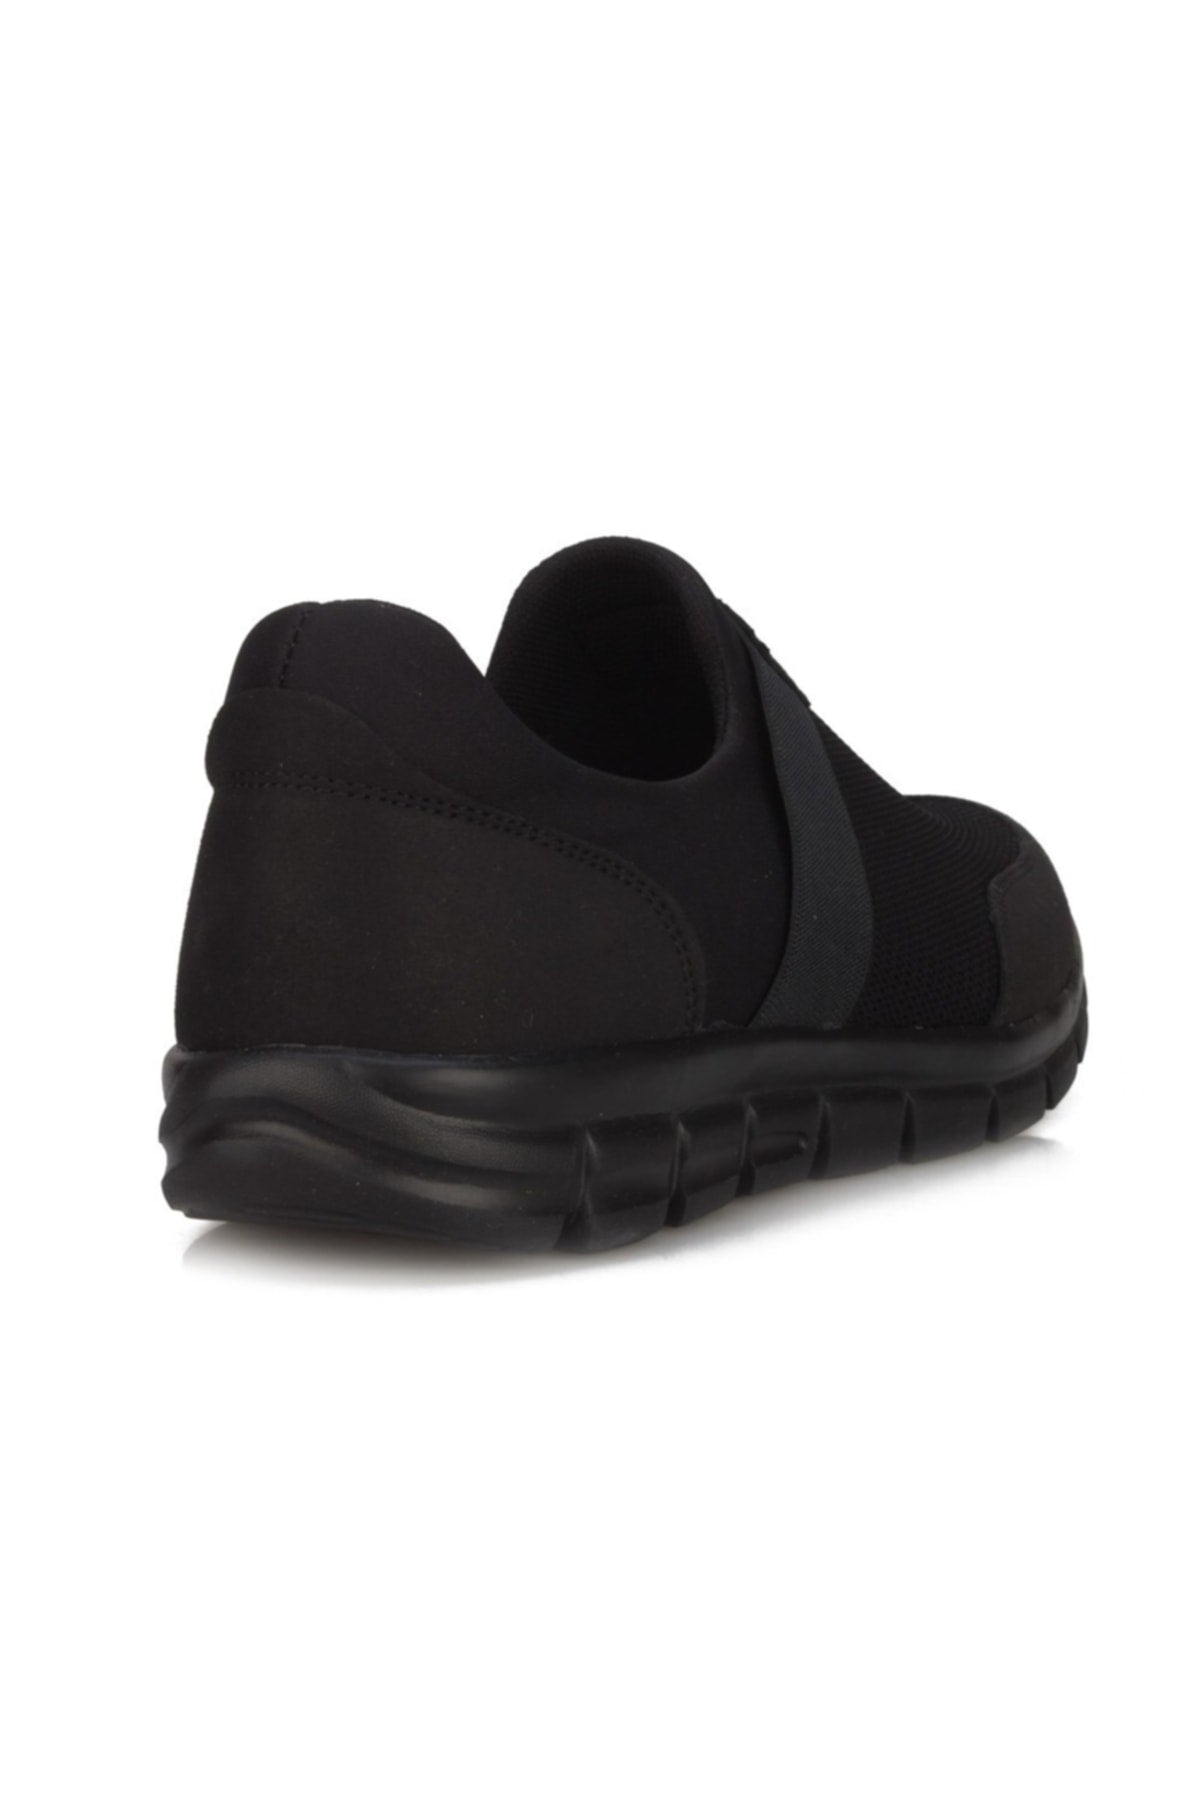 Black - Unisex Light Softening Soft Baseless Daily Hiking Sport Shoes